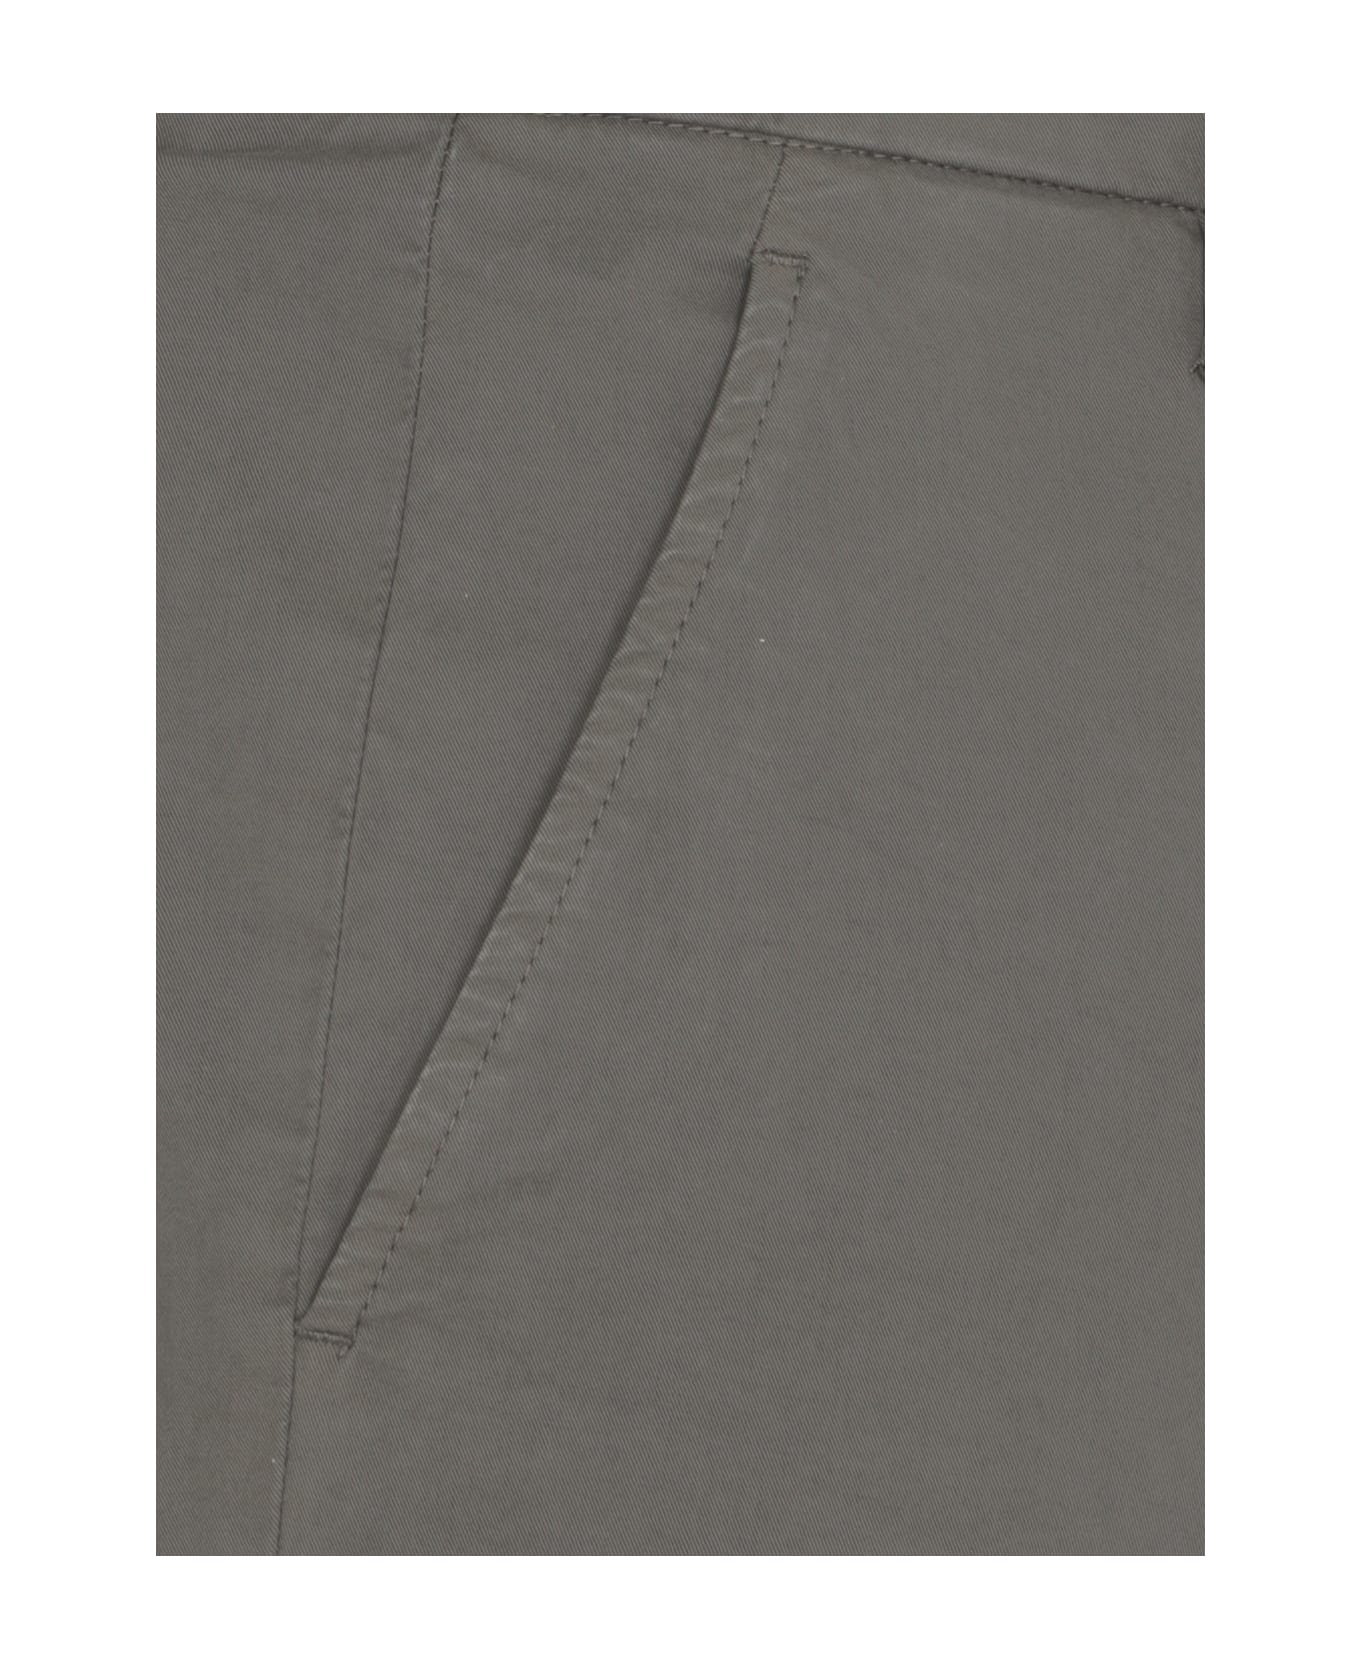 Dondup Gaubert Trousers - Grey